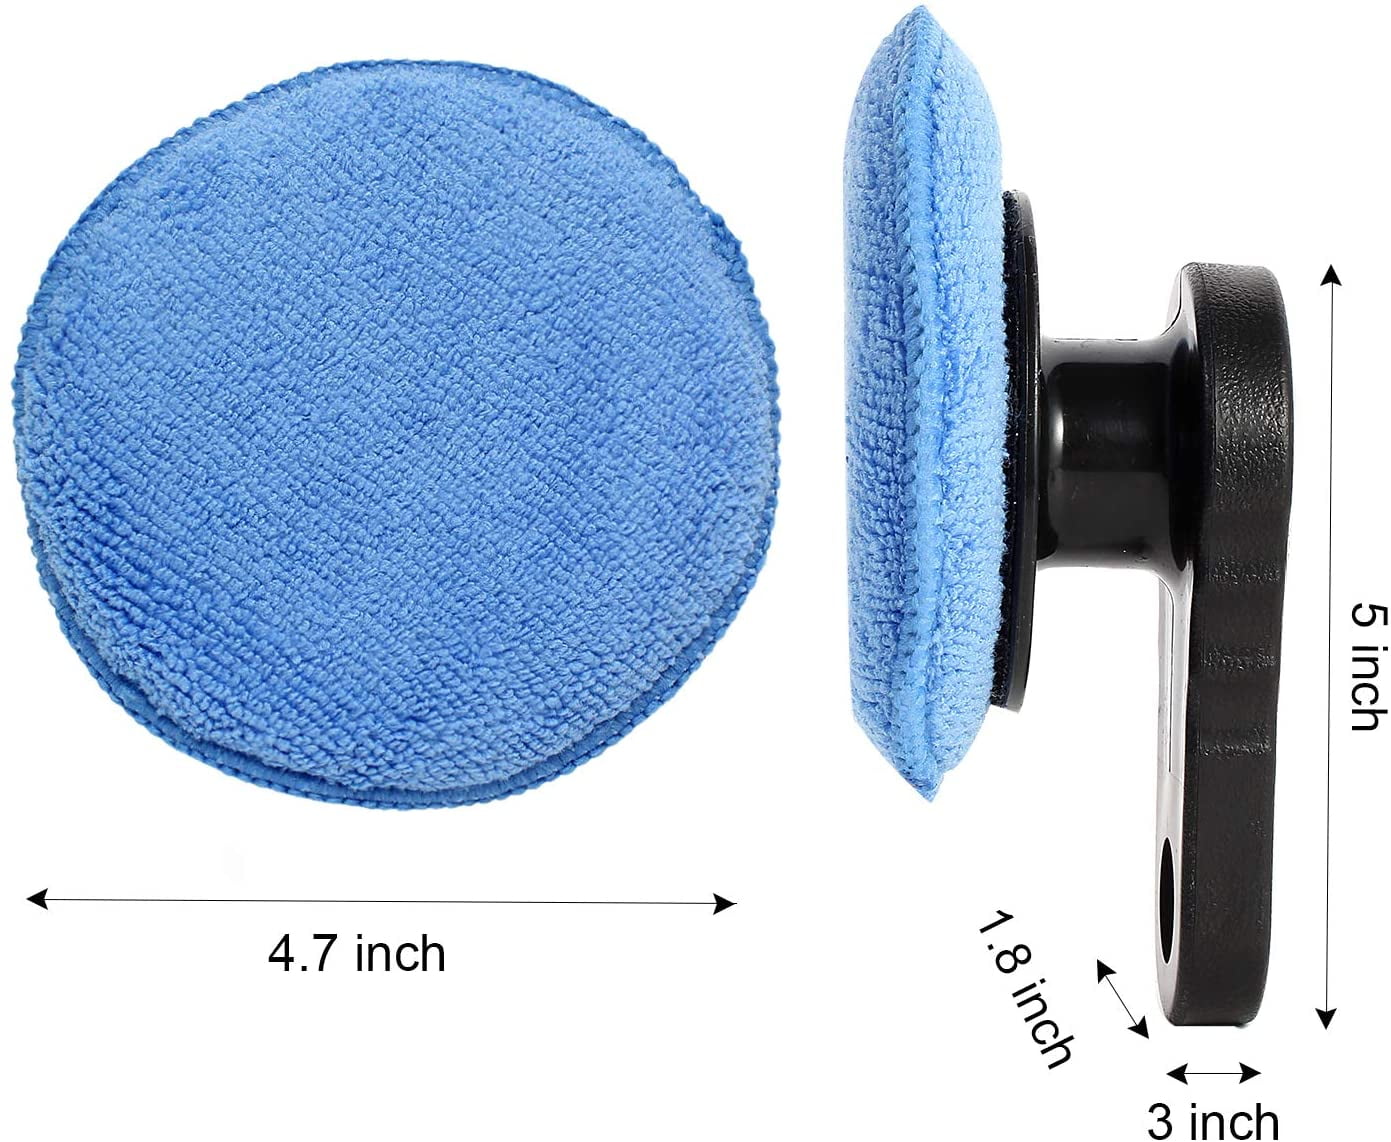 FANSI 7 Pcs Car Wax Applicator Pads Kit 4.7 inch Microfiber Sponge Applicators Soft Foam Waxing Pad with Grip Handle Large 